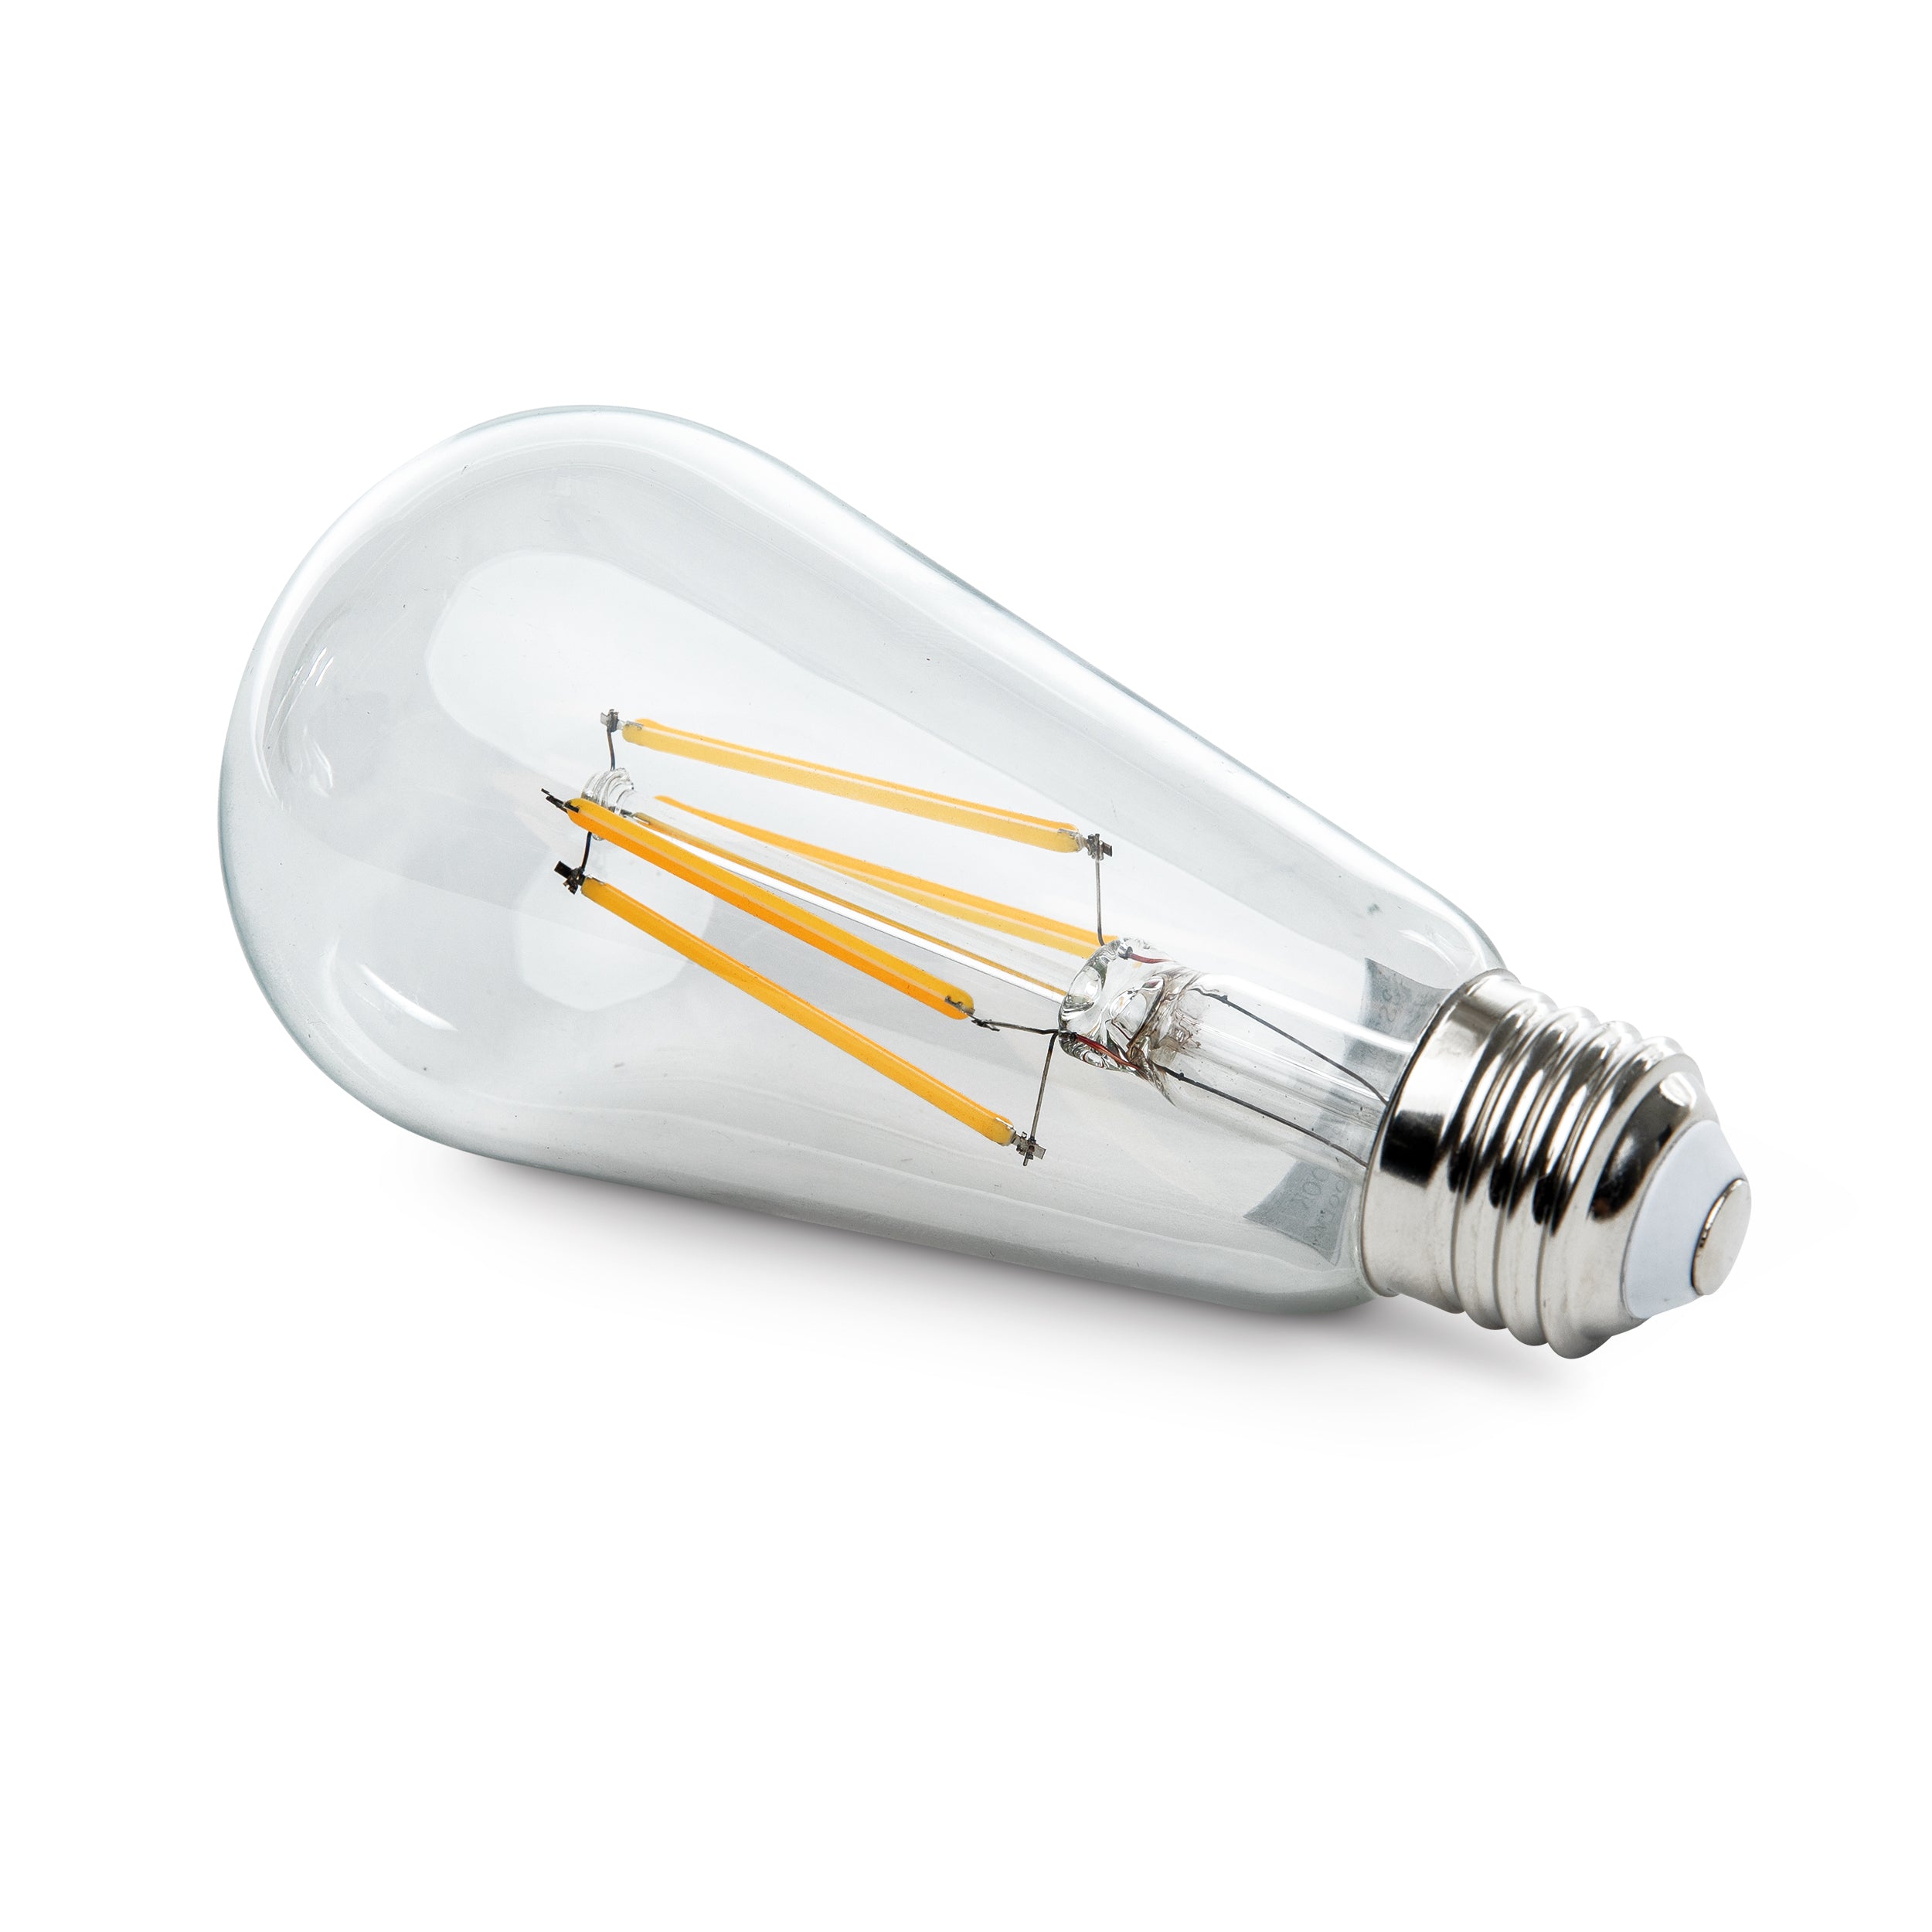 ST64 LED Filament Bulbs | LIGHTING | SUNCO – Sunco Lighting